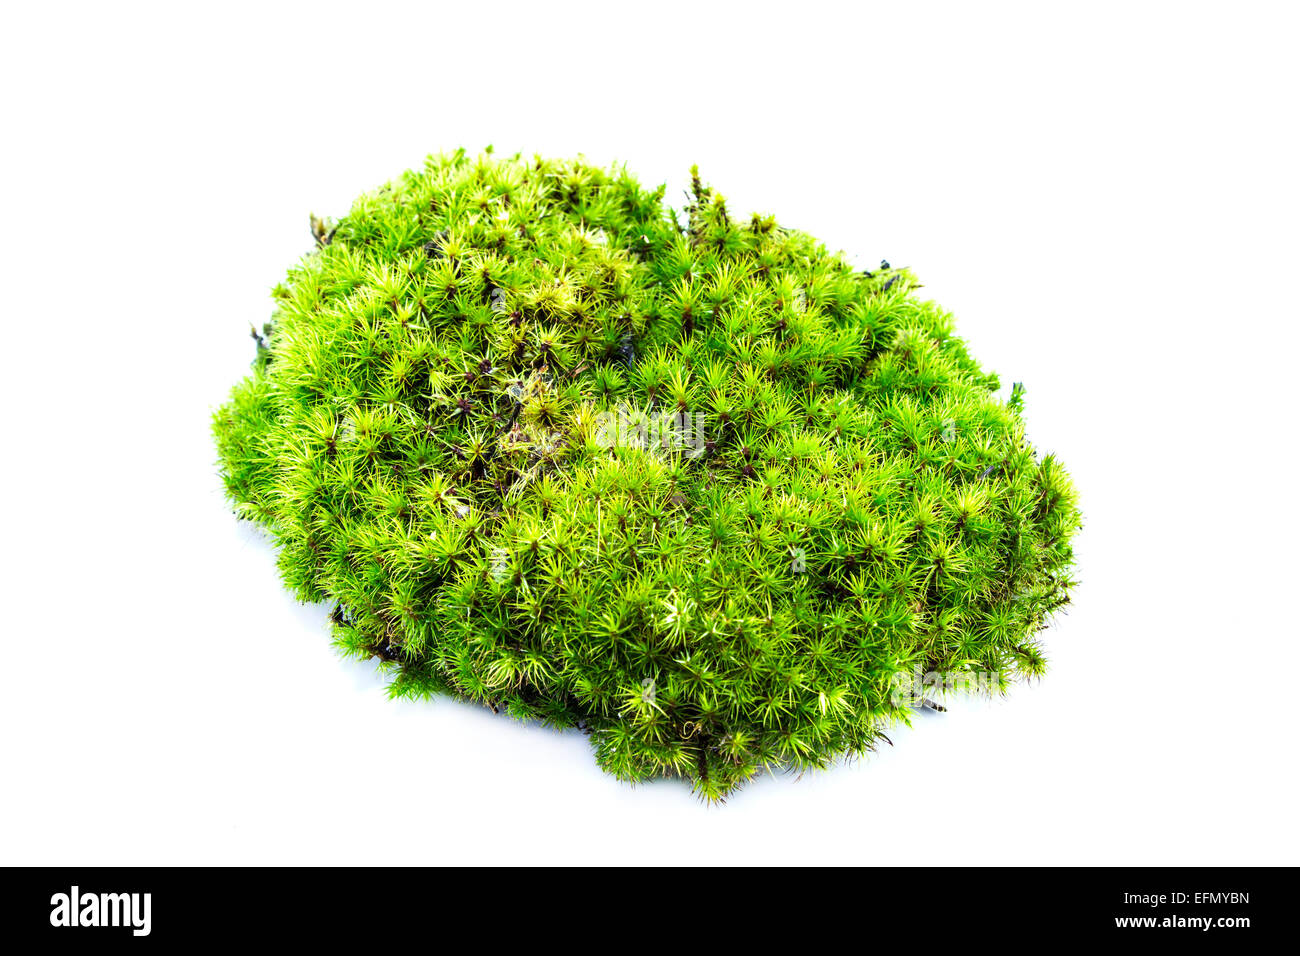 Green moss on white background Stock Photo - Alamy